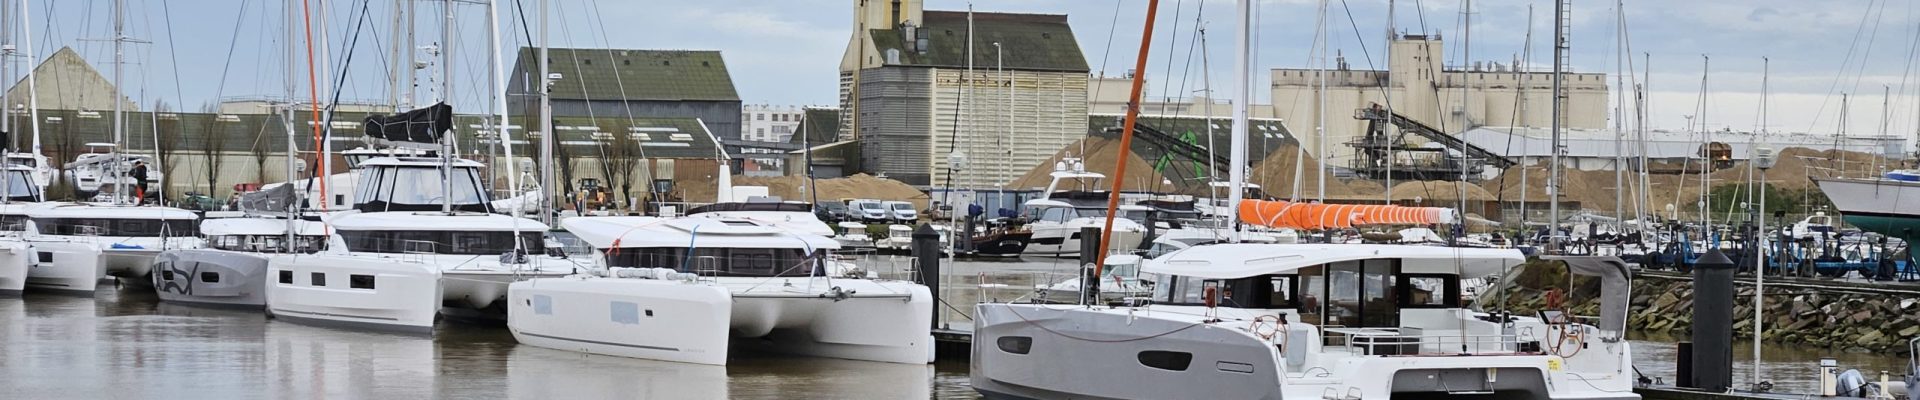 Multihull Yacht Lagoon Dock In Les Sables D'Olonne